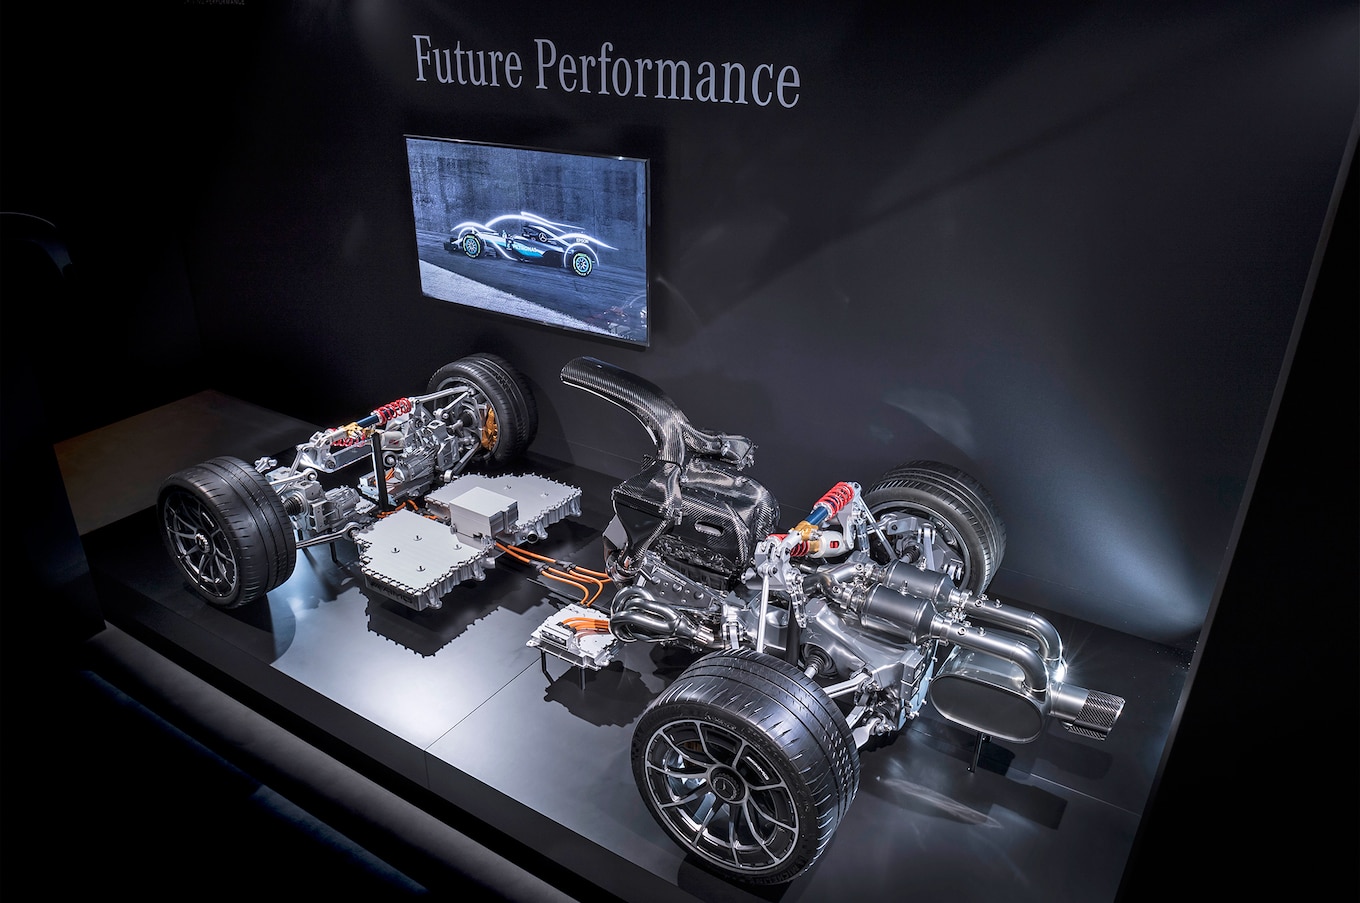 2019-Mercedes-AMG-Project-One-Powertrain-06.jpg